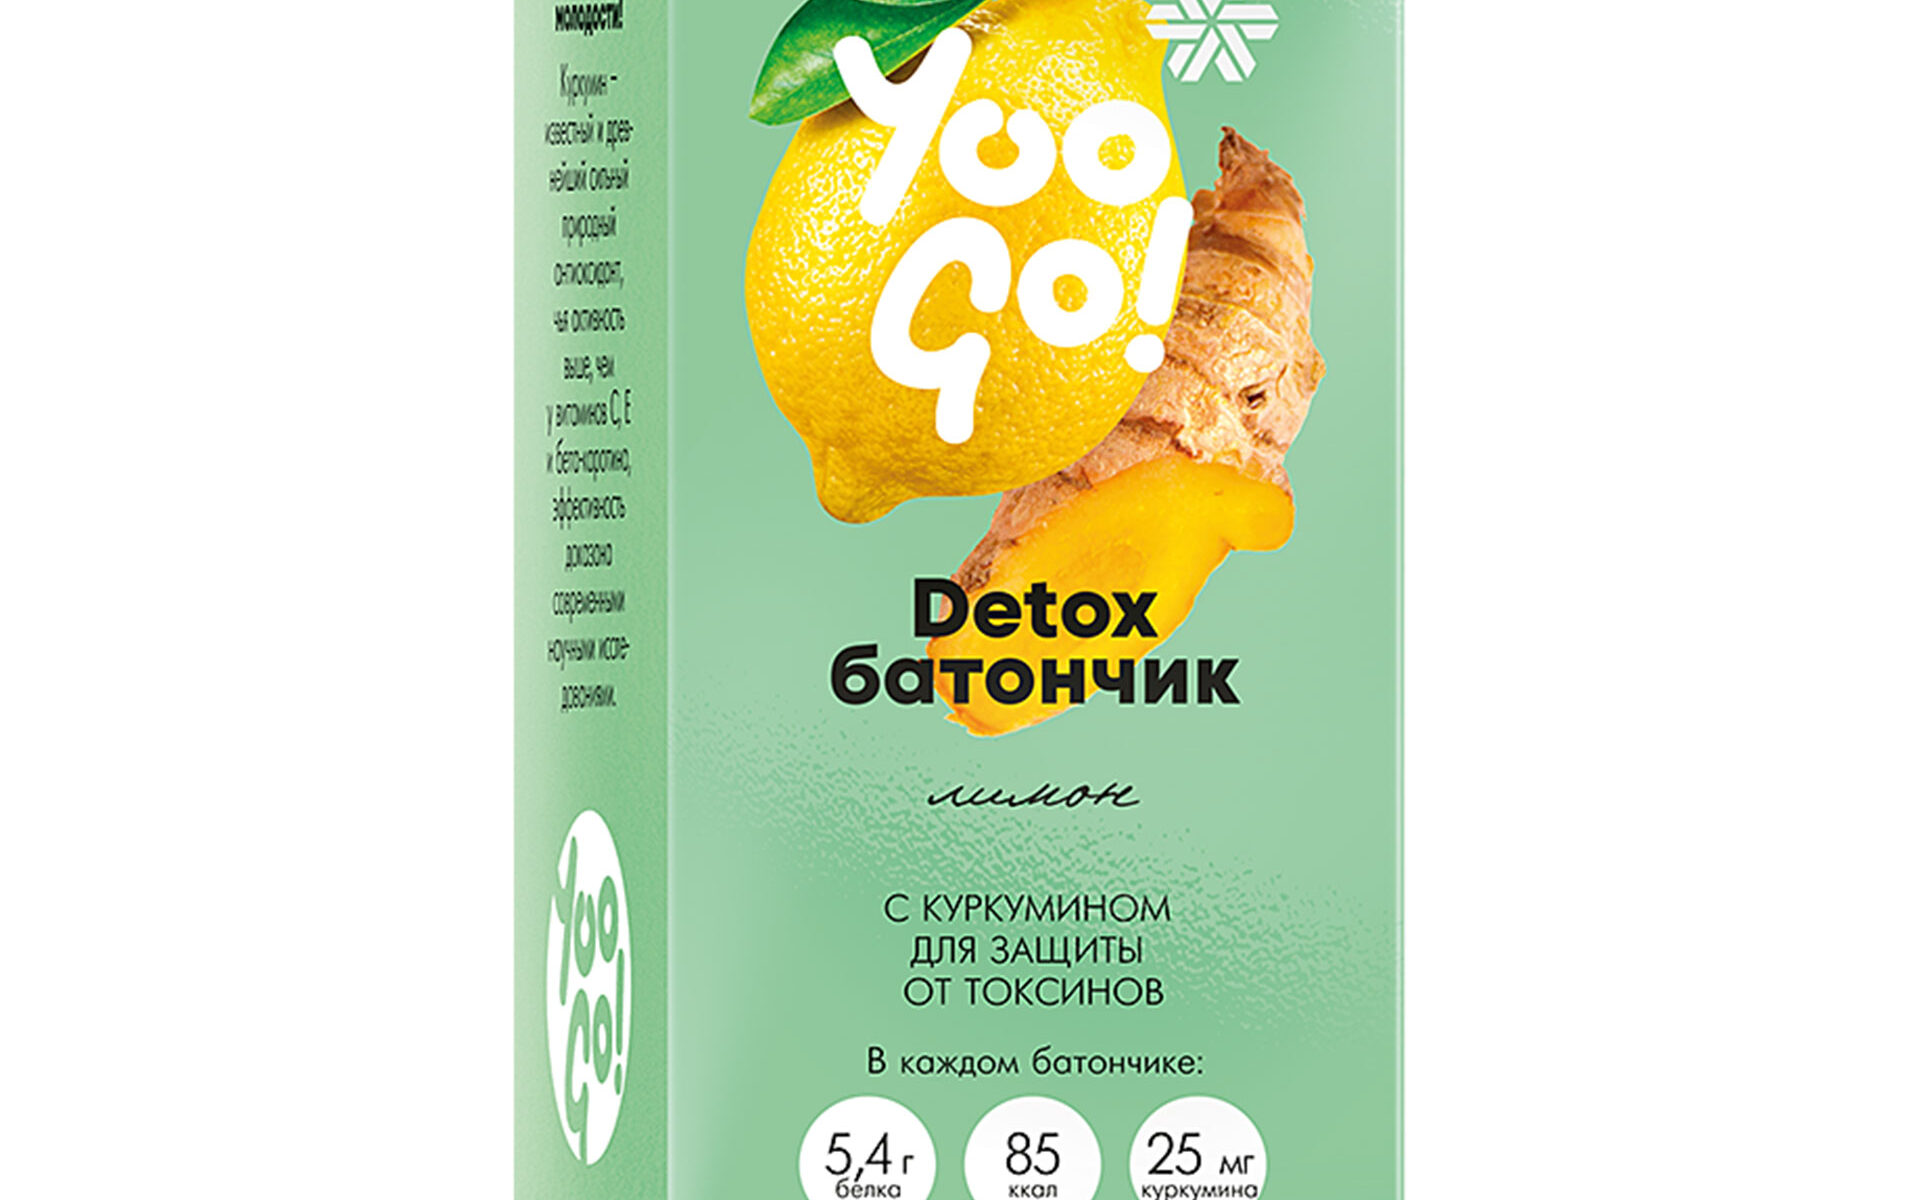 Detox-батончик (лимон) Yoo Gо